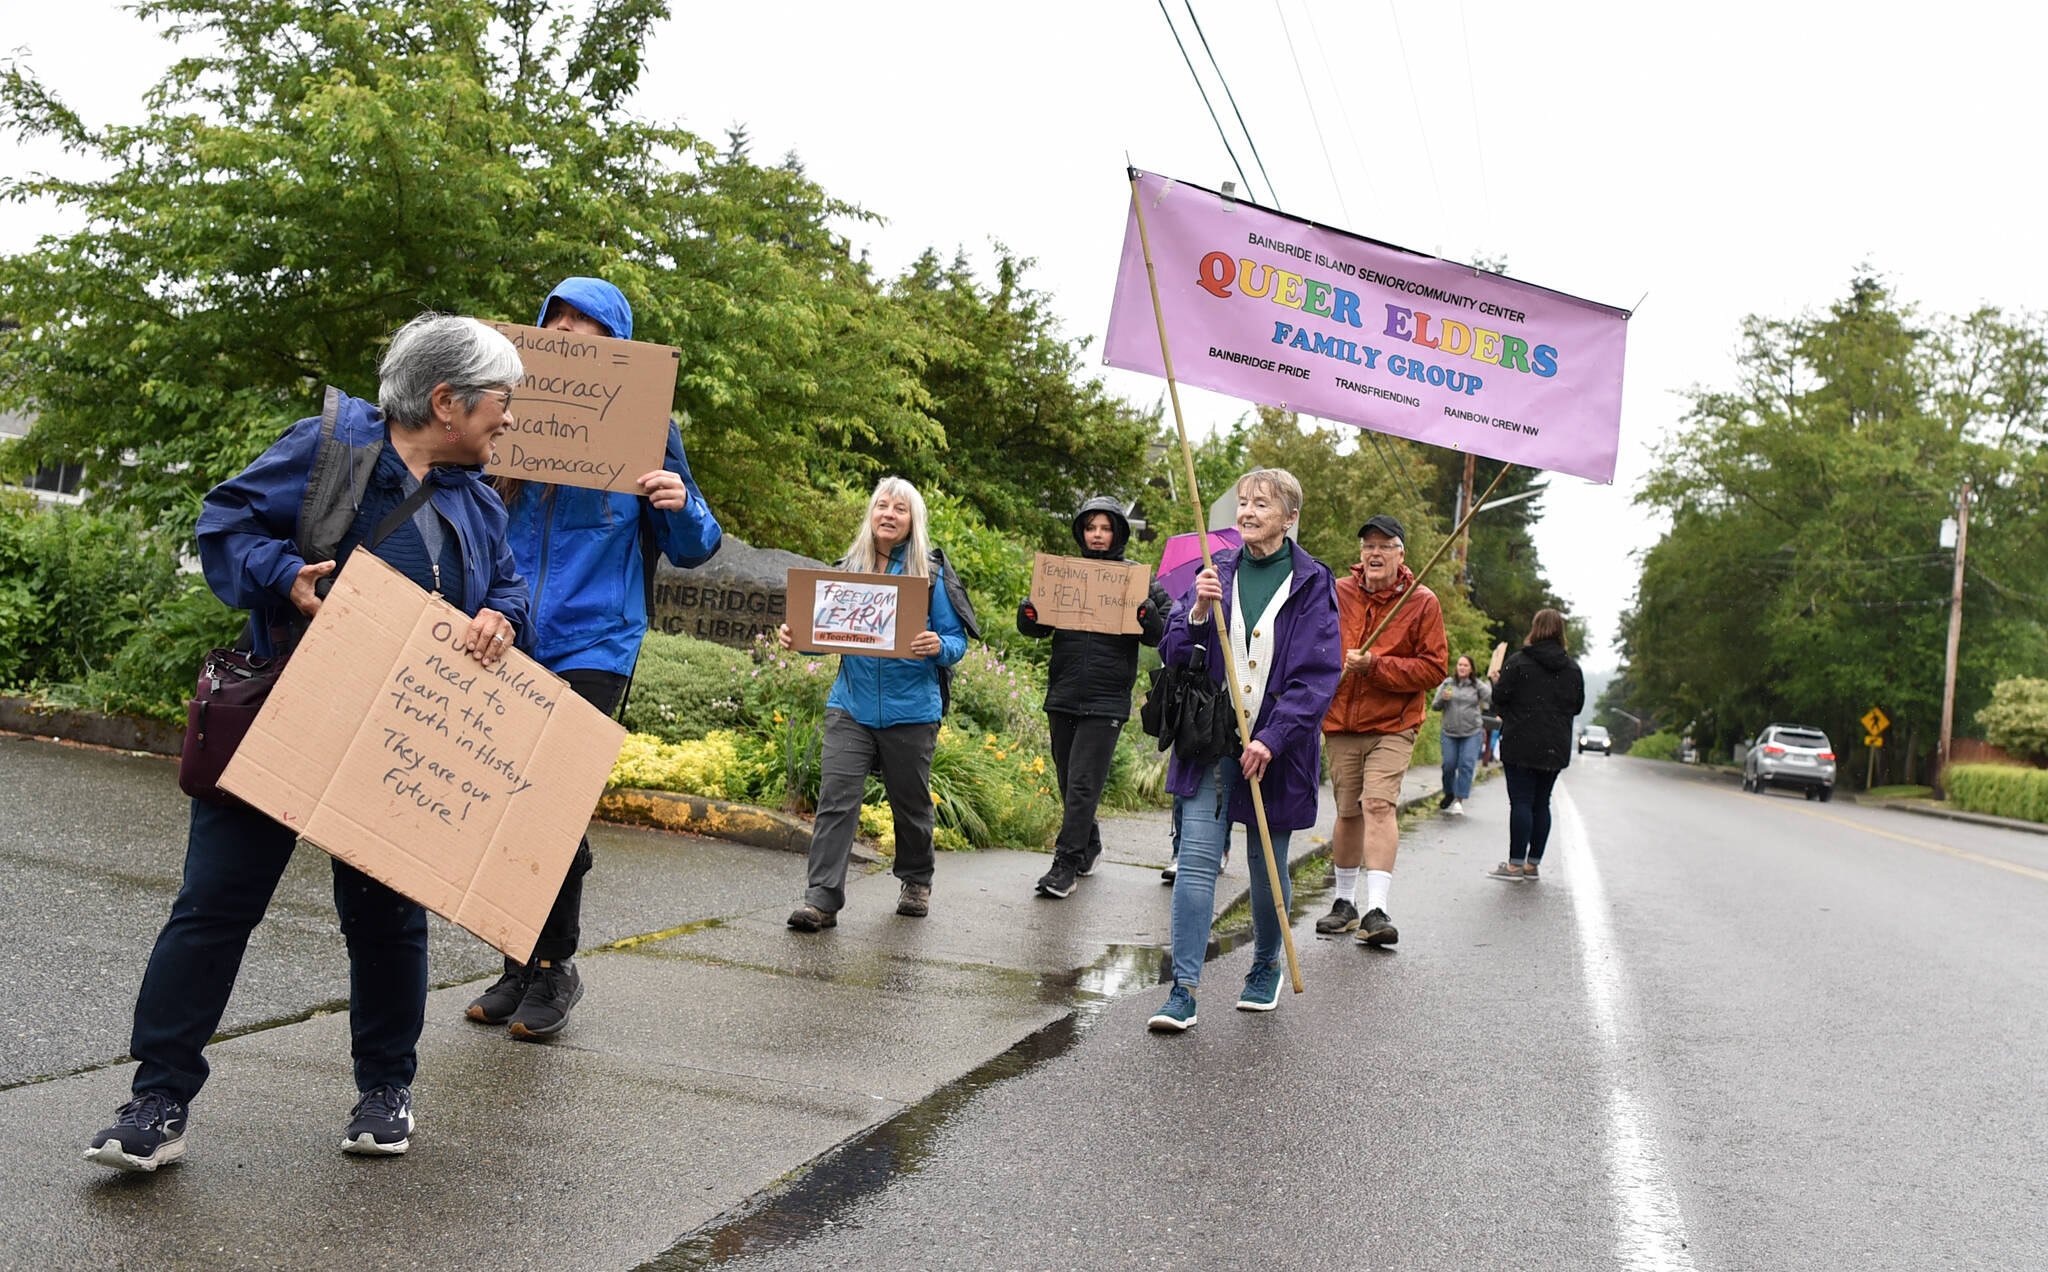 Activists carry a banner in support of queer elders.